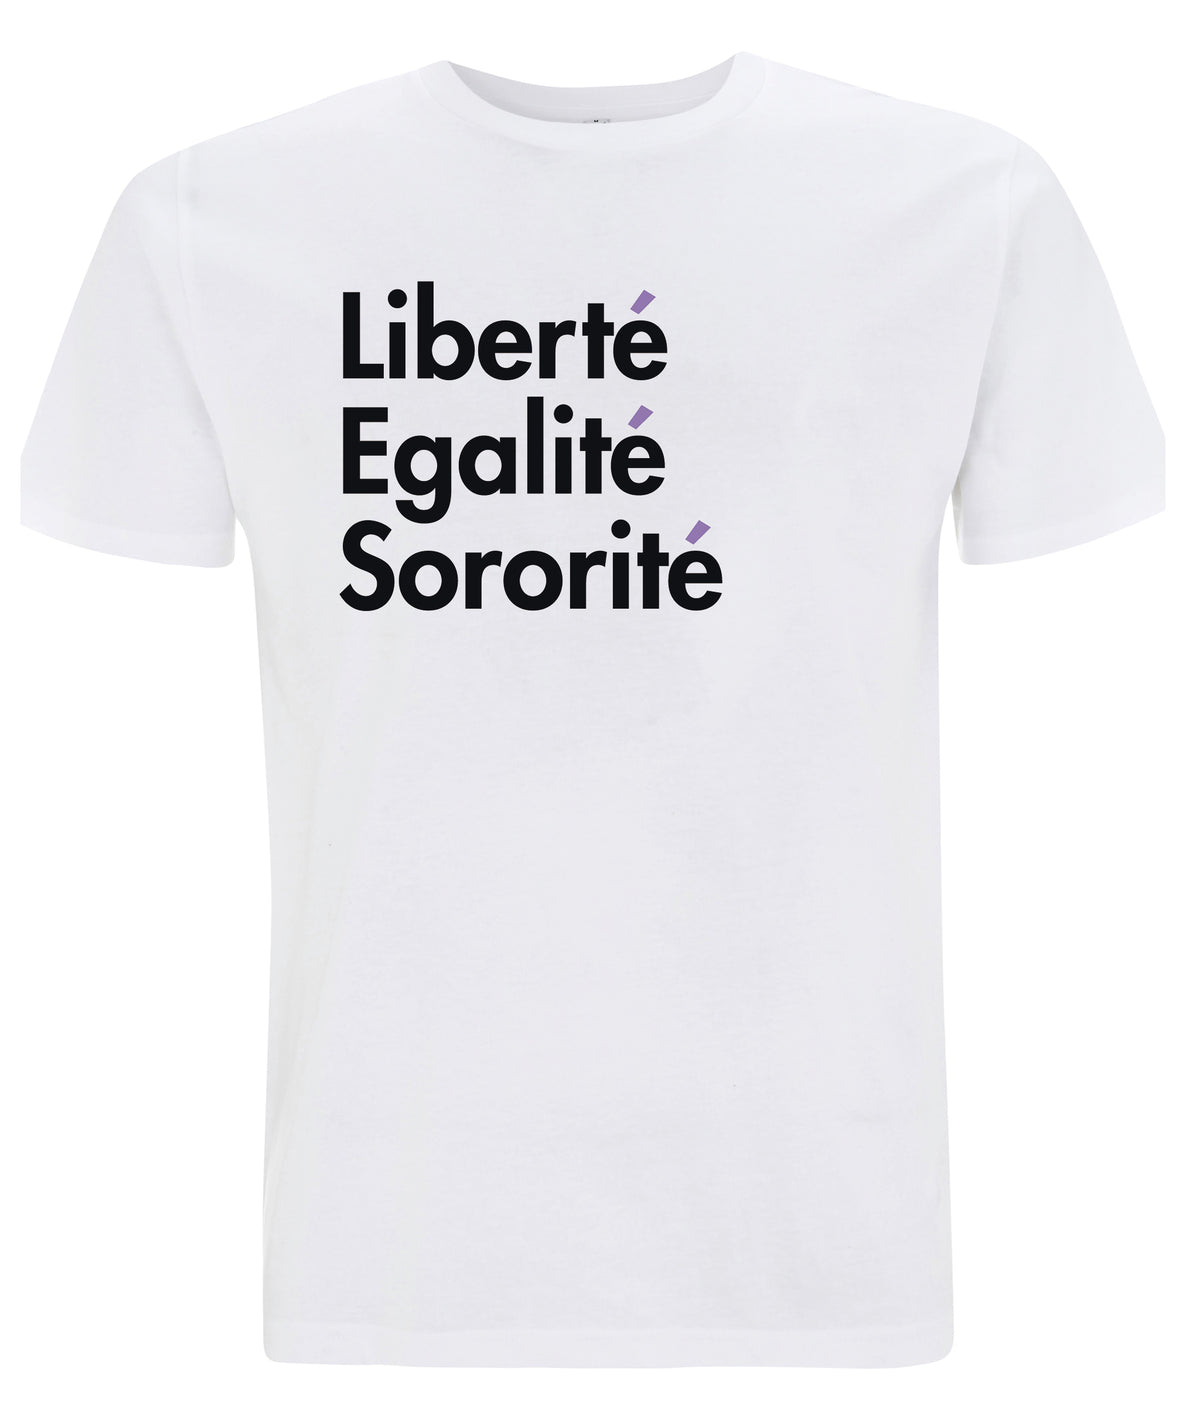 Liberté Egalité Sororité Organic Feminist T Shirt White